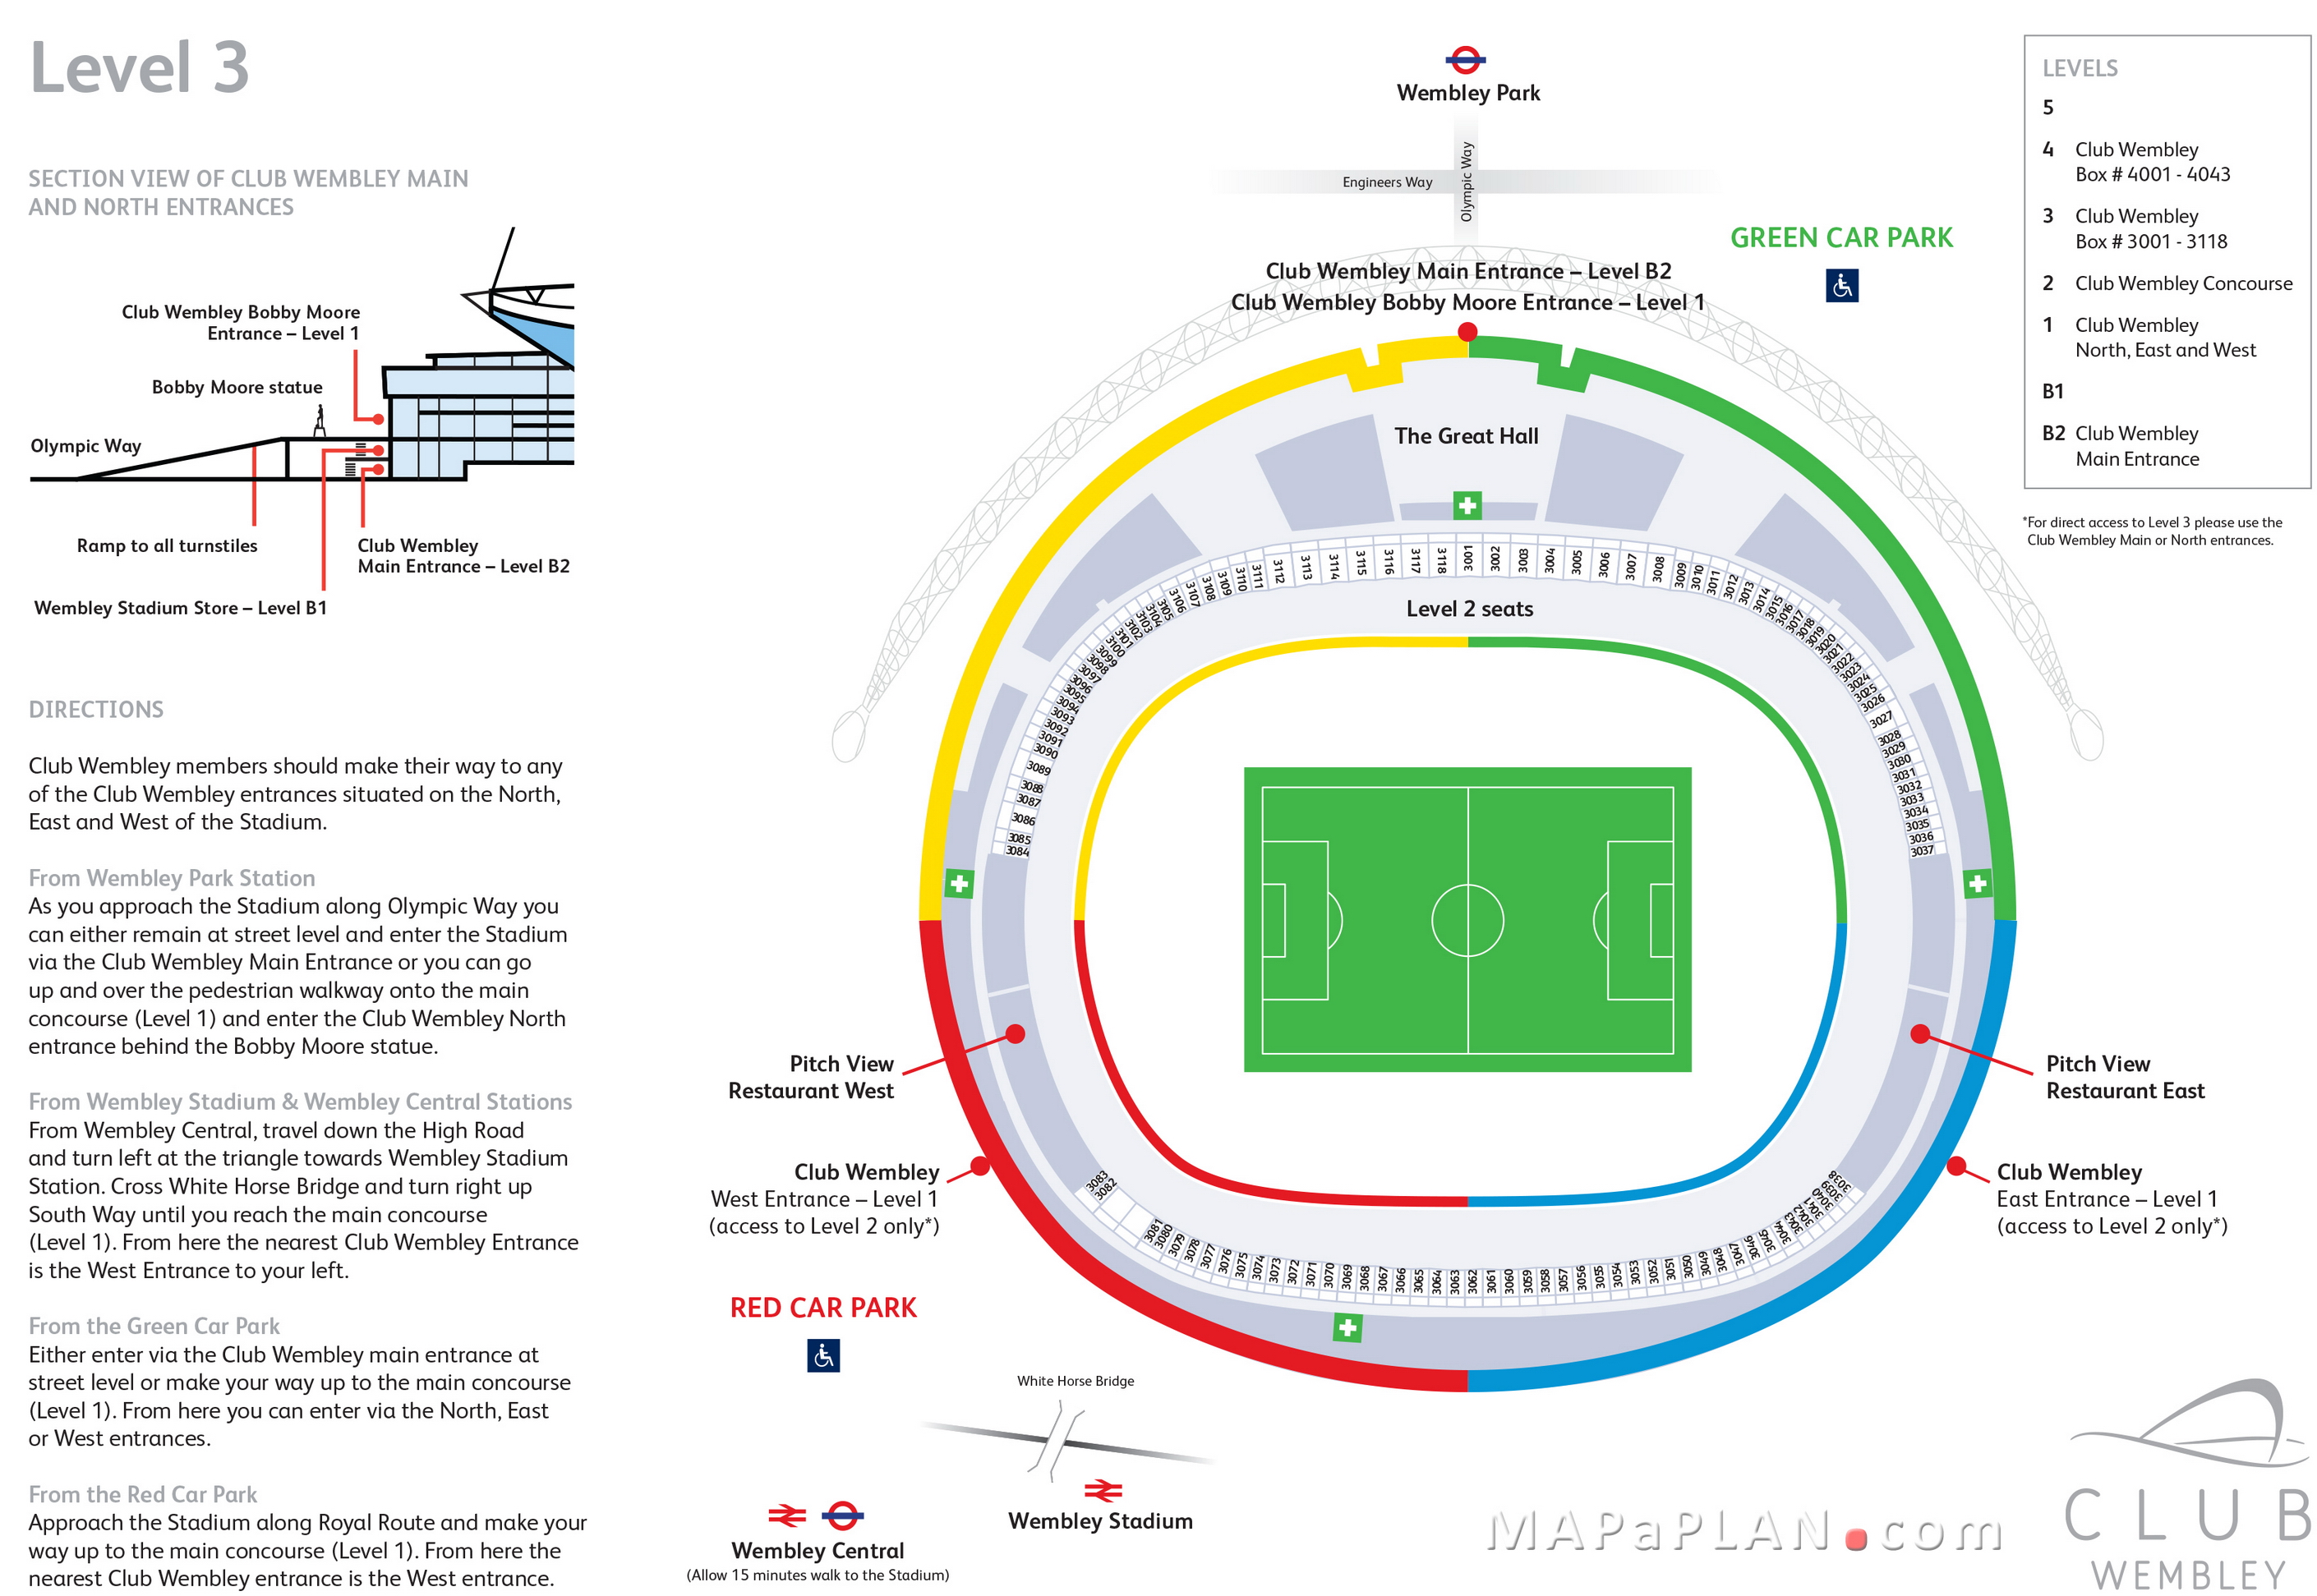 Wembley Stadium seating plan Level 3 Club Wembley boxes